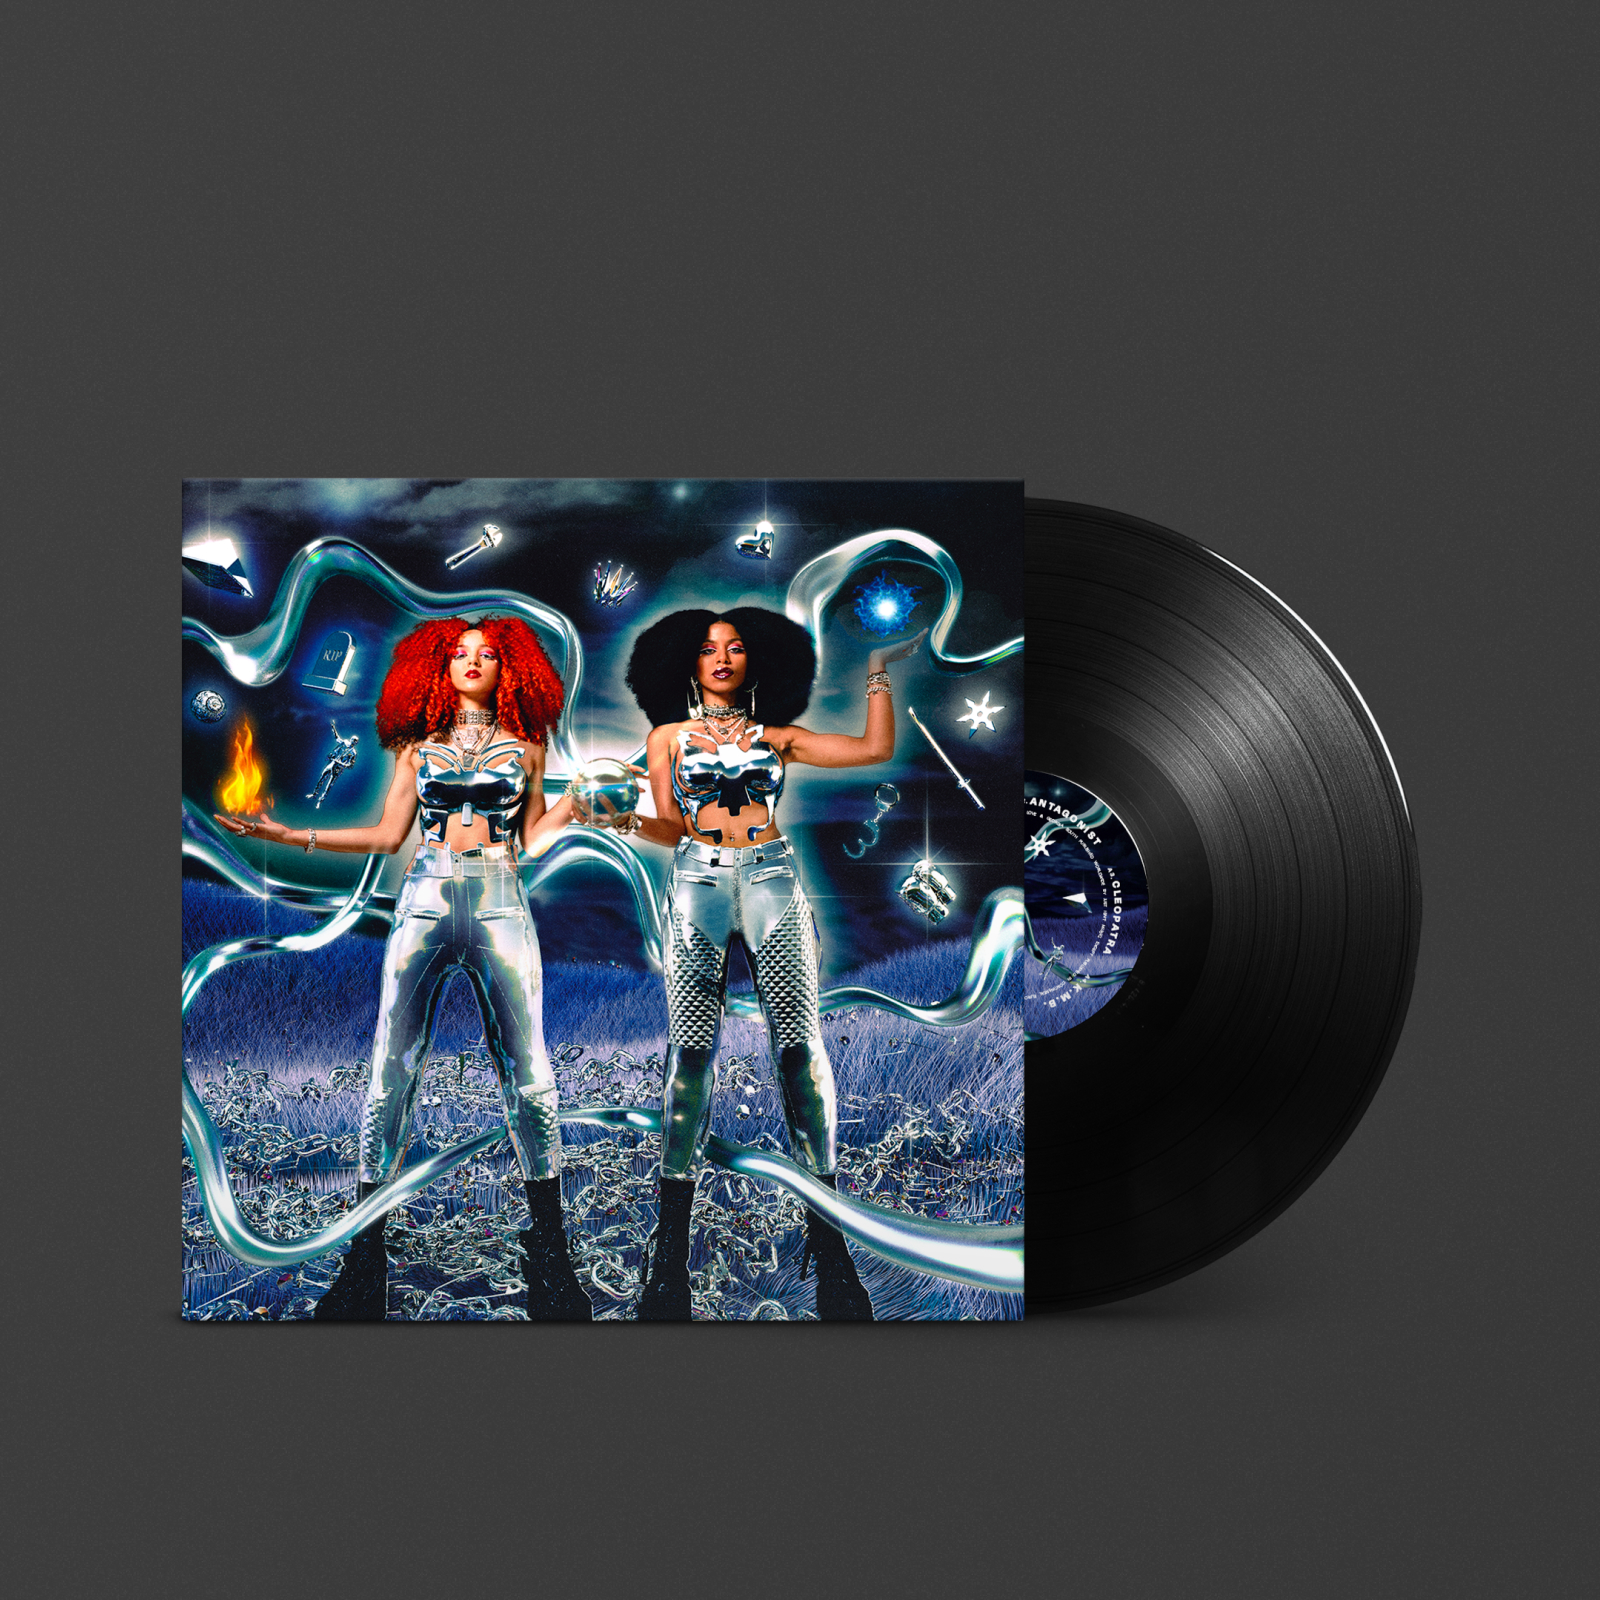 Vinyle de Supernova par Nova Twins